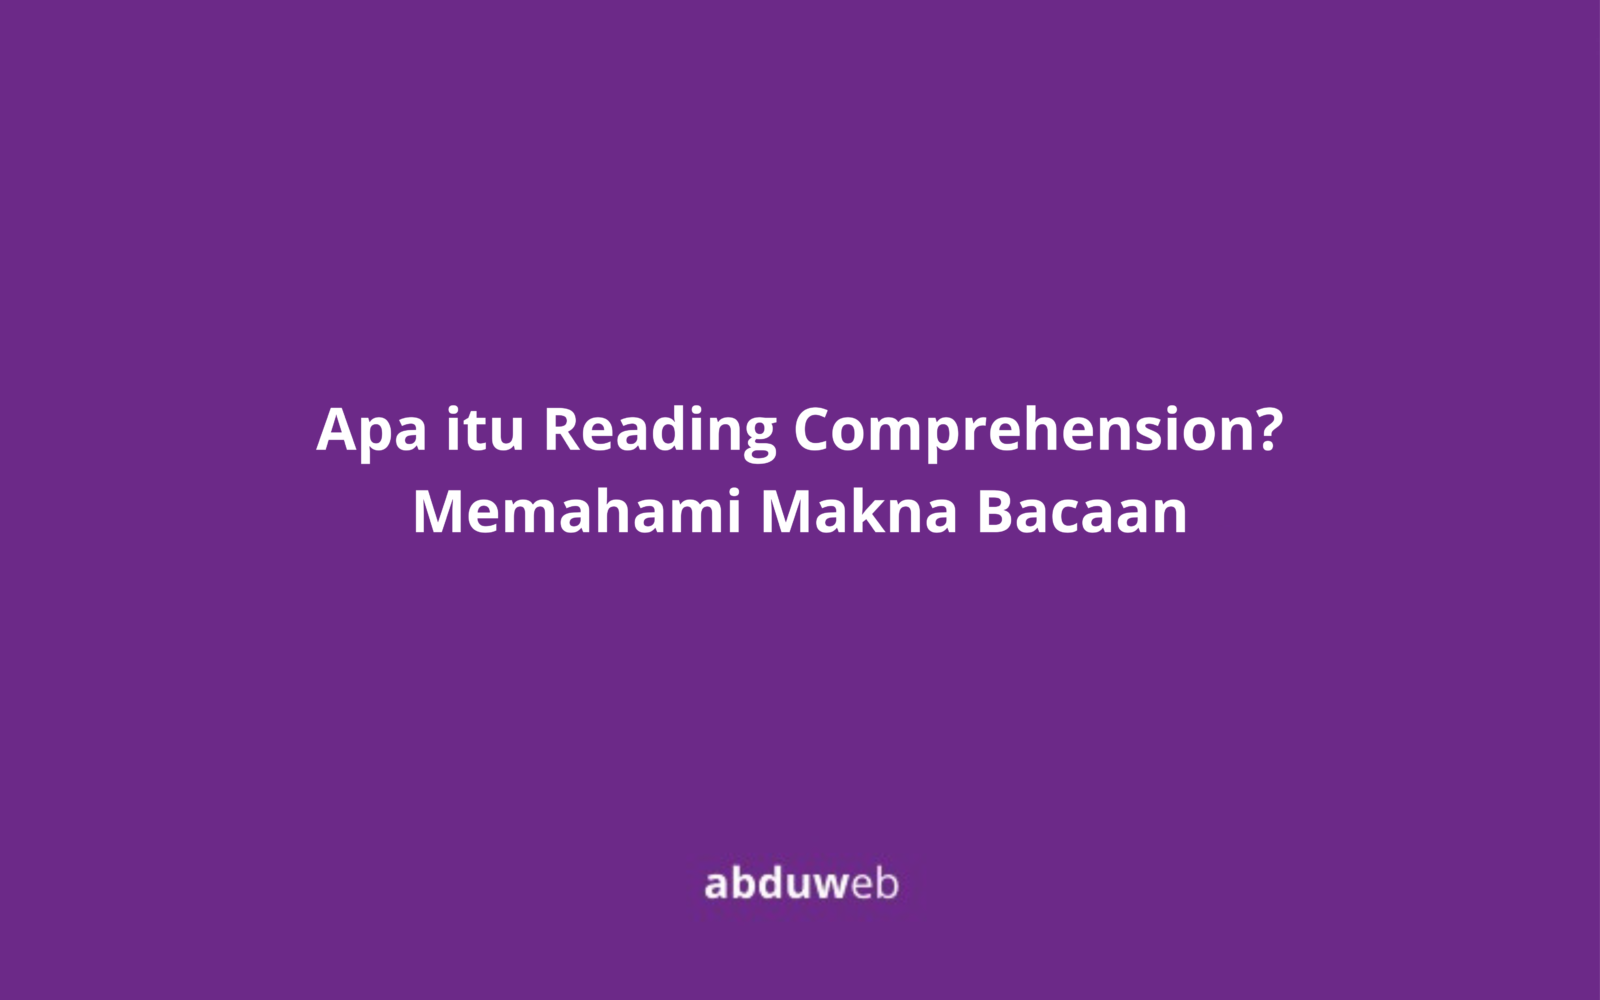 Apa itu Reading Comprehension